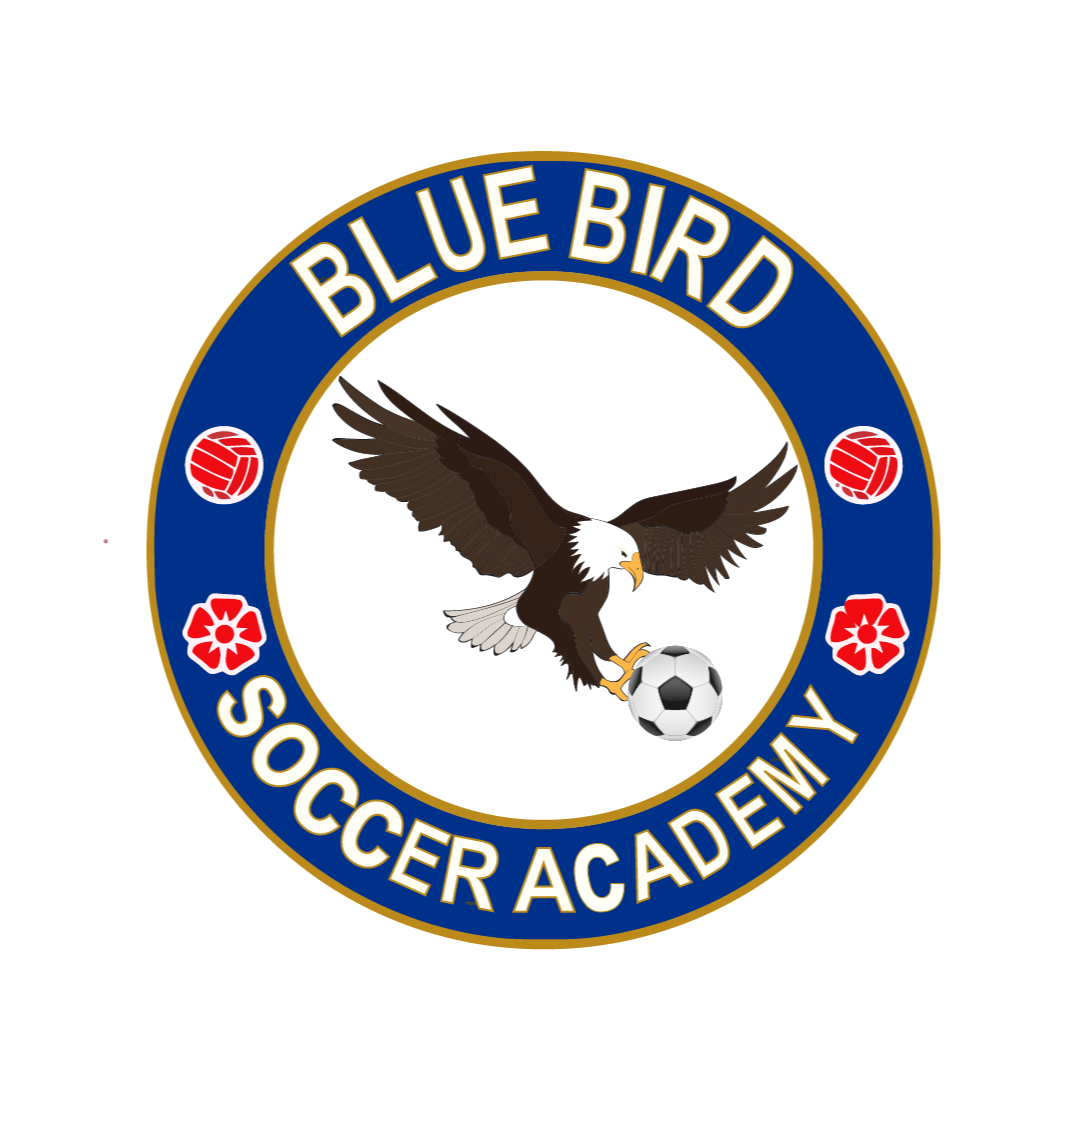 Bluebird Soccer Academy logo